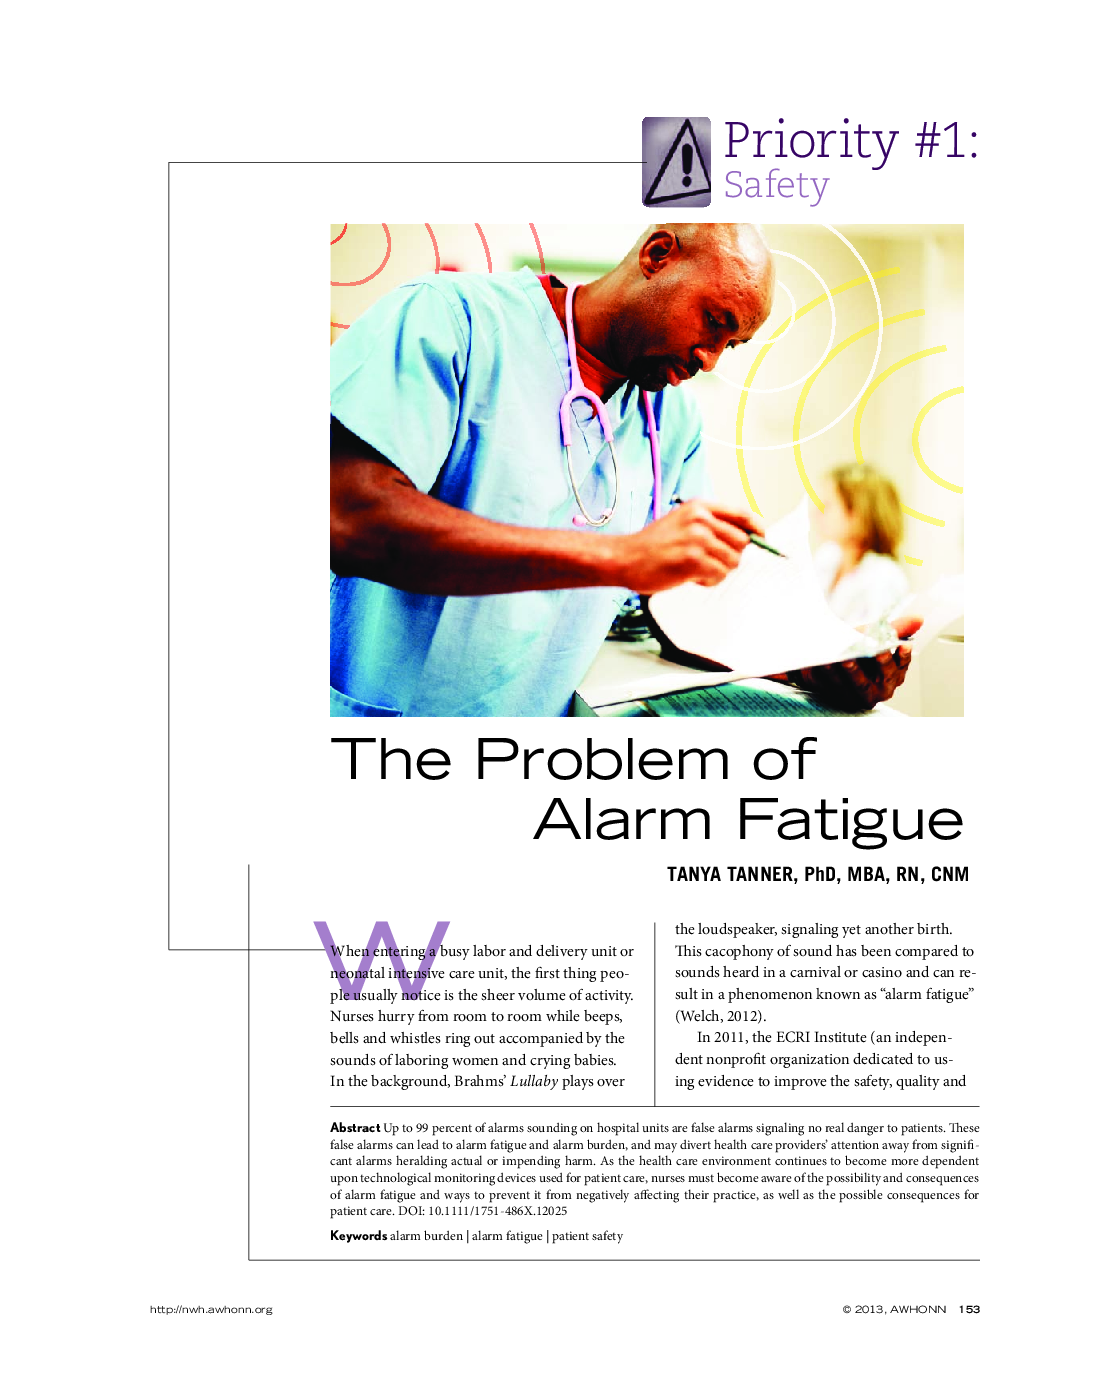 The Problem of Alarm Fatigue